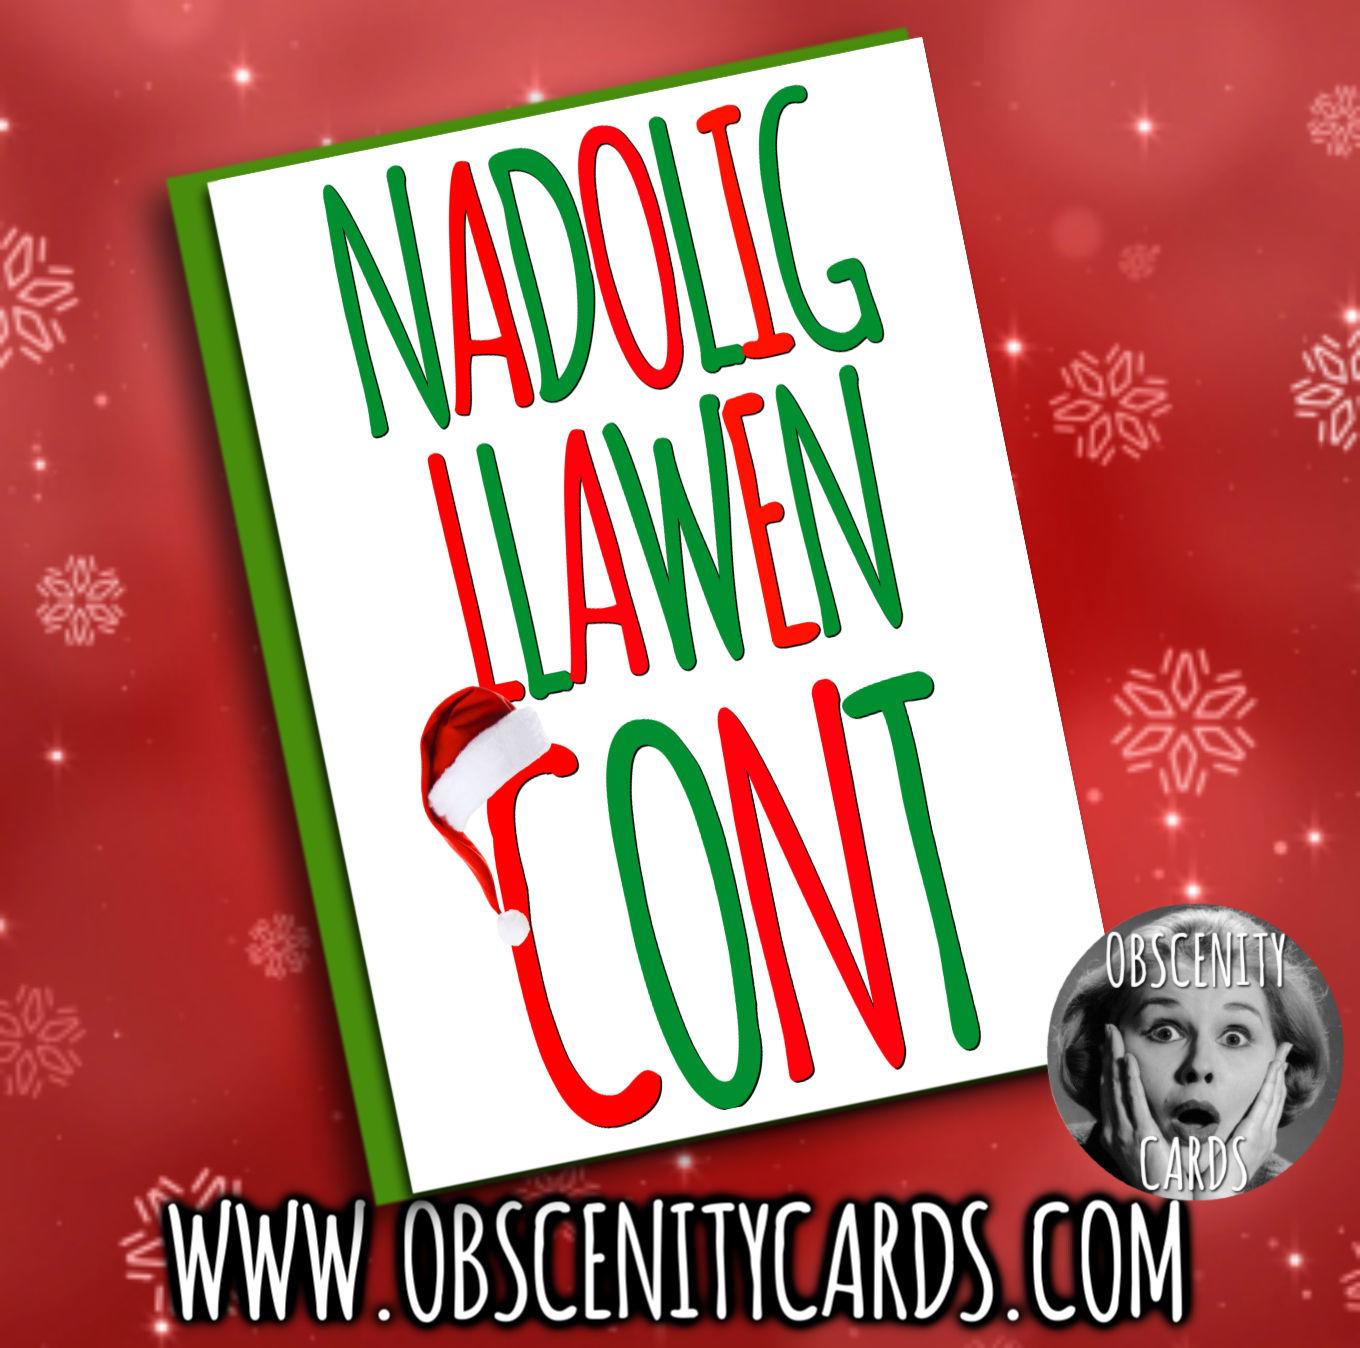 Nnadolig Llawen Cont Funny Welsh Christmas Card